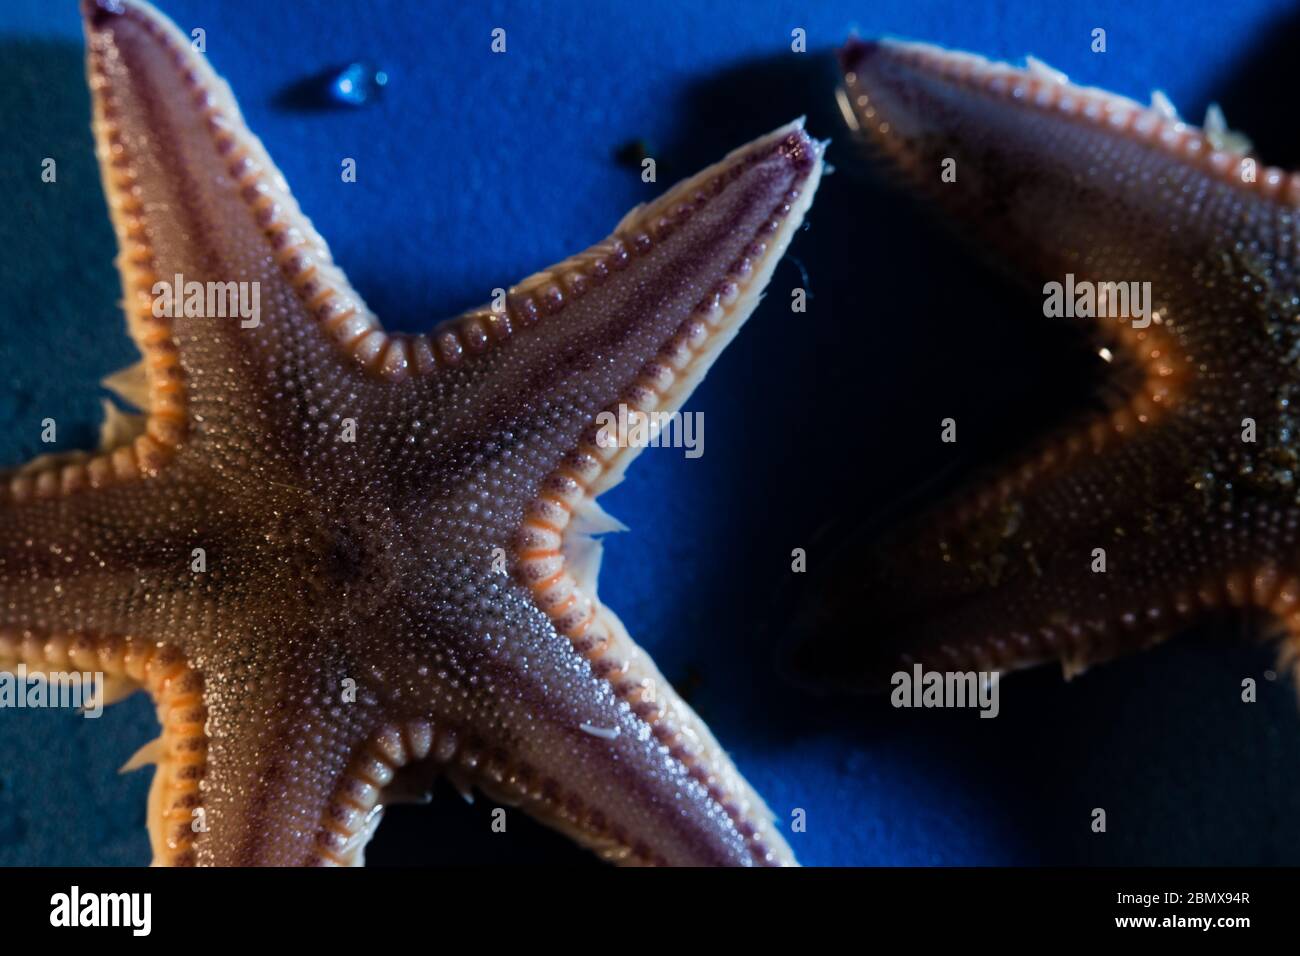 Astropecten orange trim sea star, Astropecten irregularis, is one of many species found on the seafloor off the coast of South Africa, Indian Ocean. Stock Photo